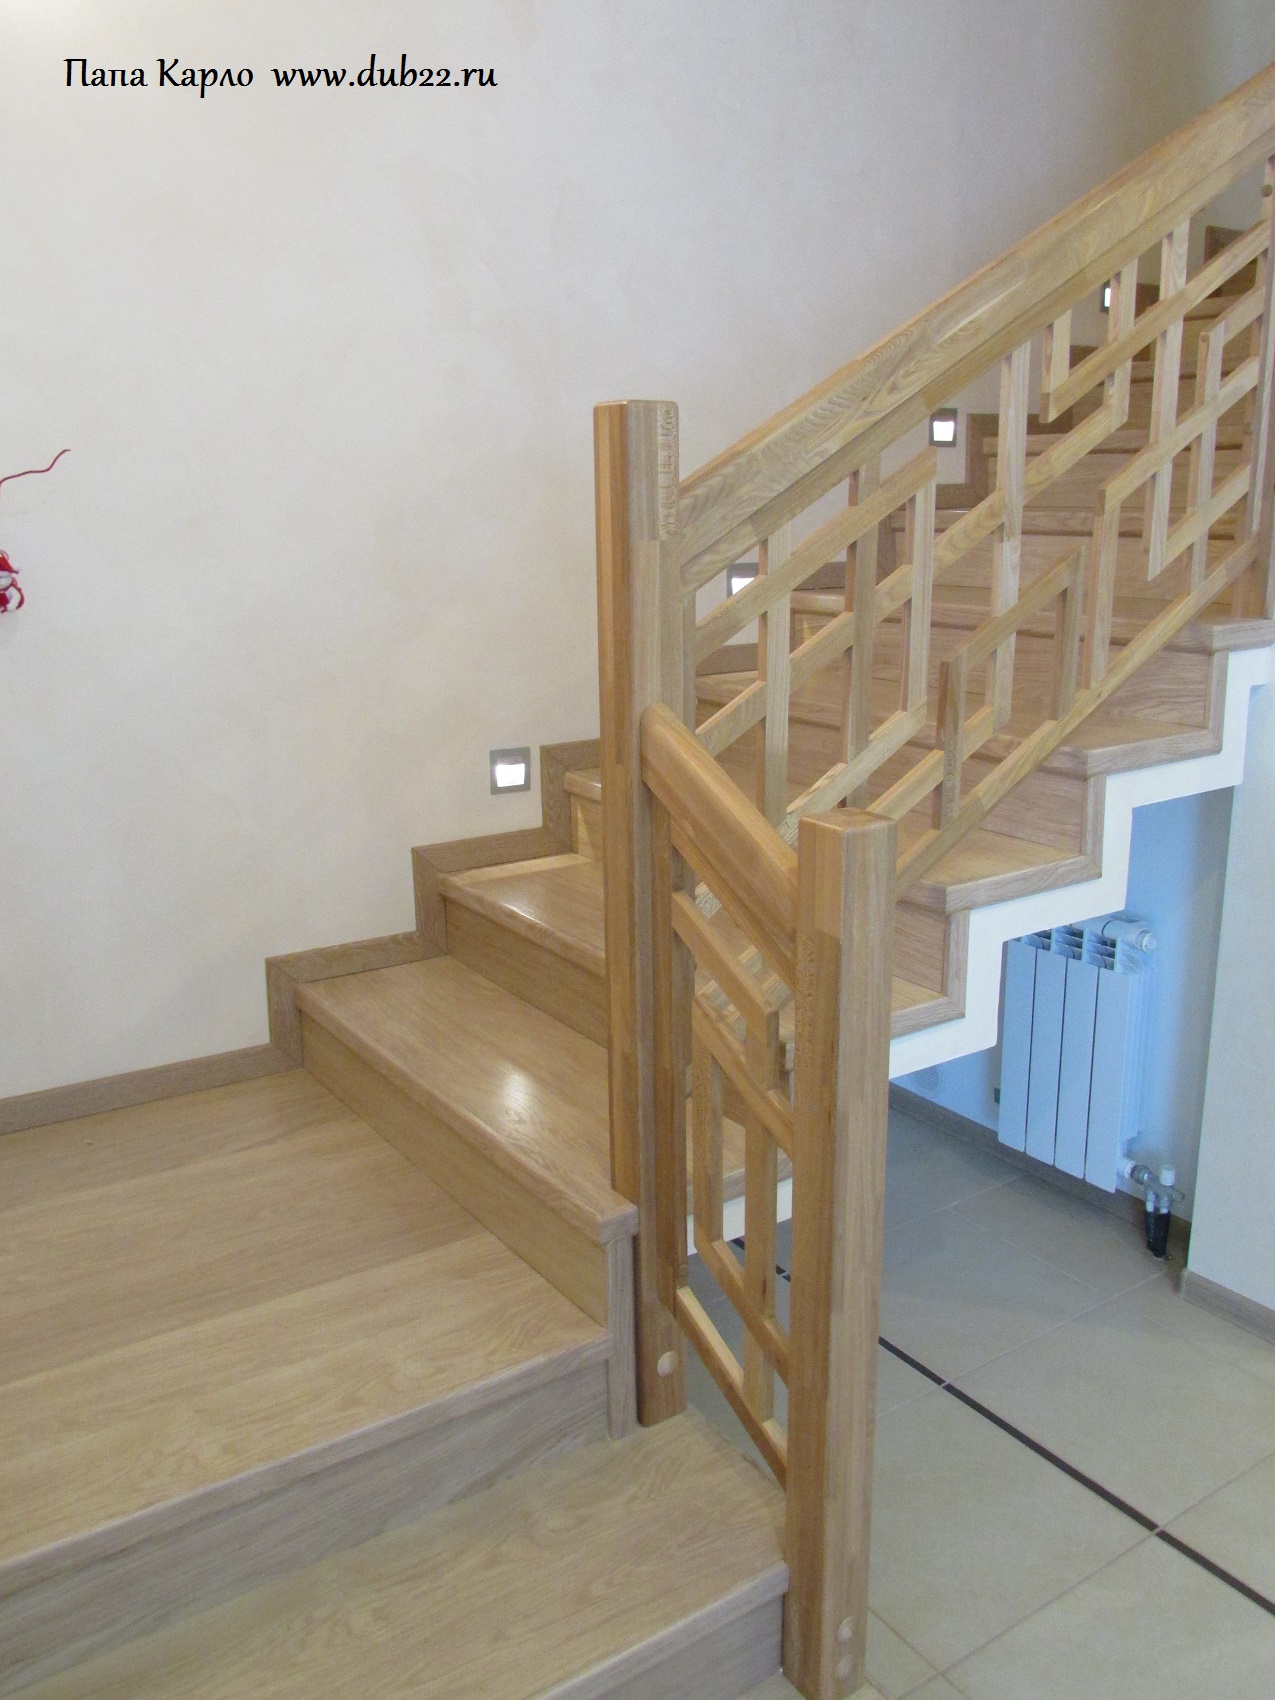 Производство деревянных лестниц в Барнауле в городе Барнаул, фото 4, телефон продавца: +7 (385) 253-39-77